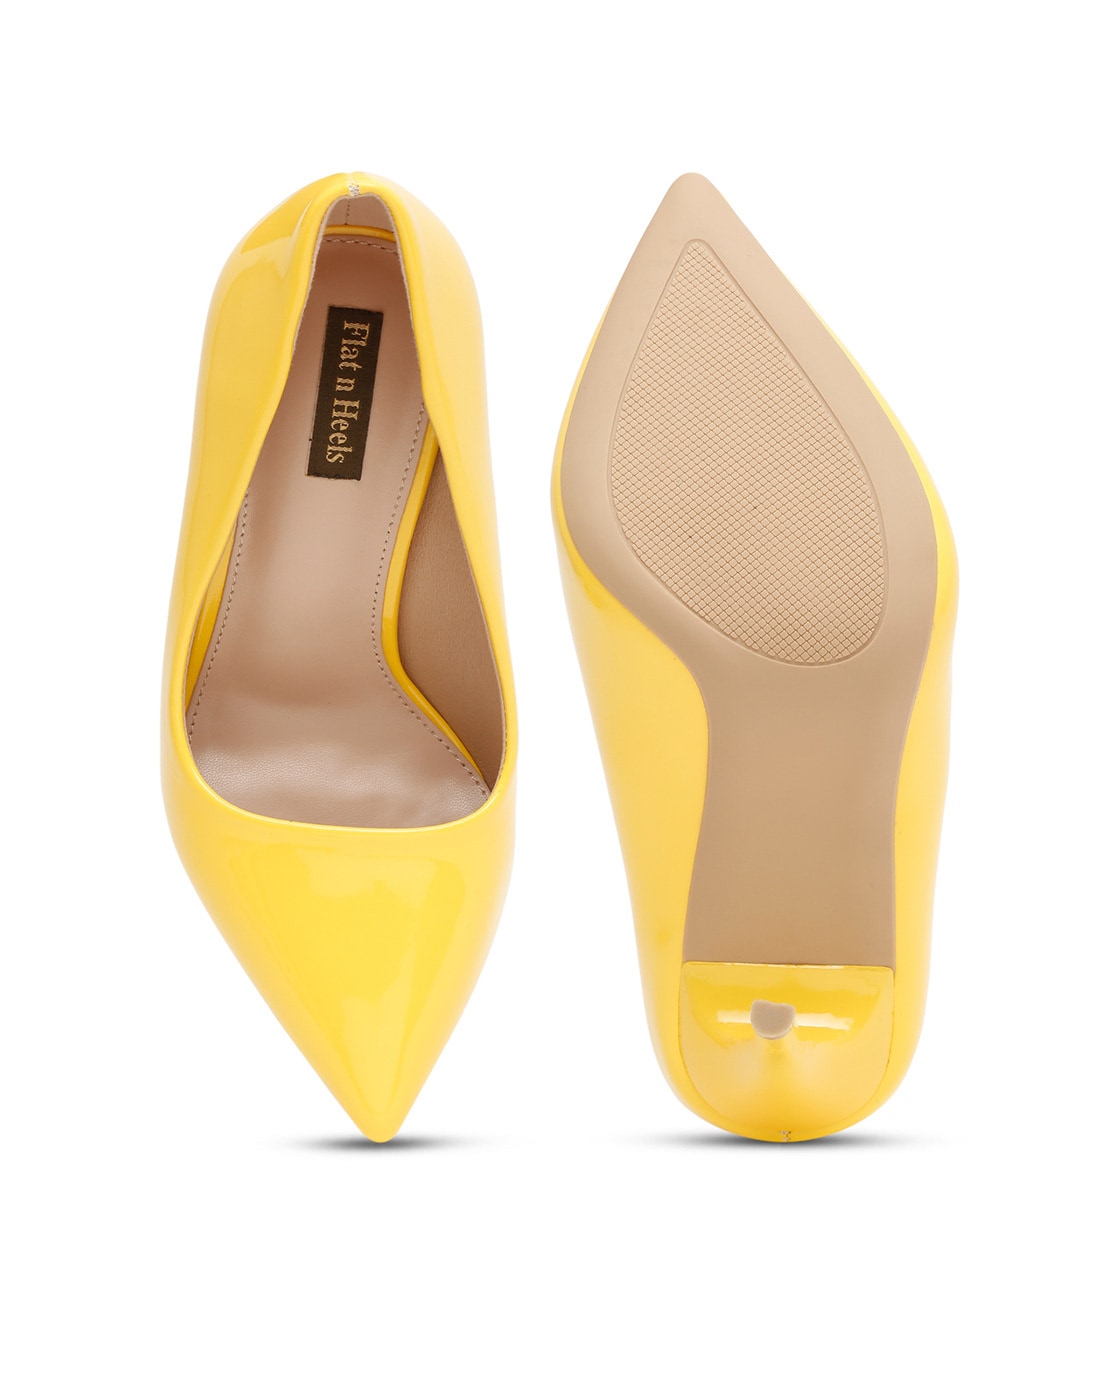 Yellow heels fashion girly cute shoes heels yellow high heels fashion and  style | Tacones amarillos, Zapatos de tacon, Tacones